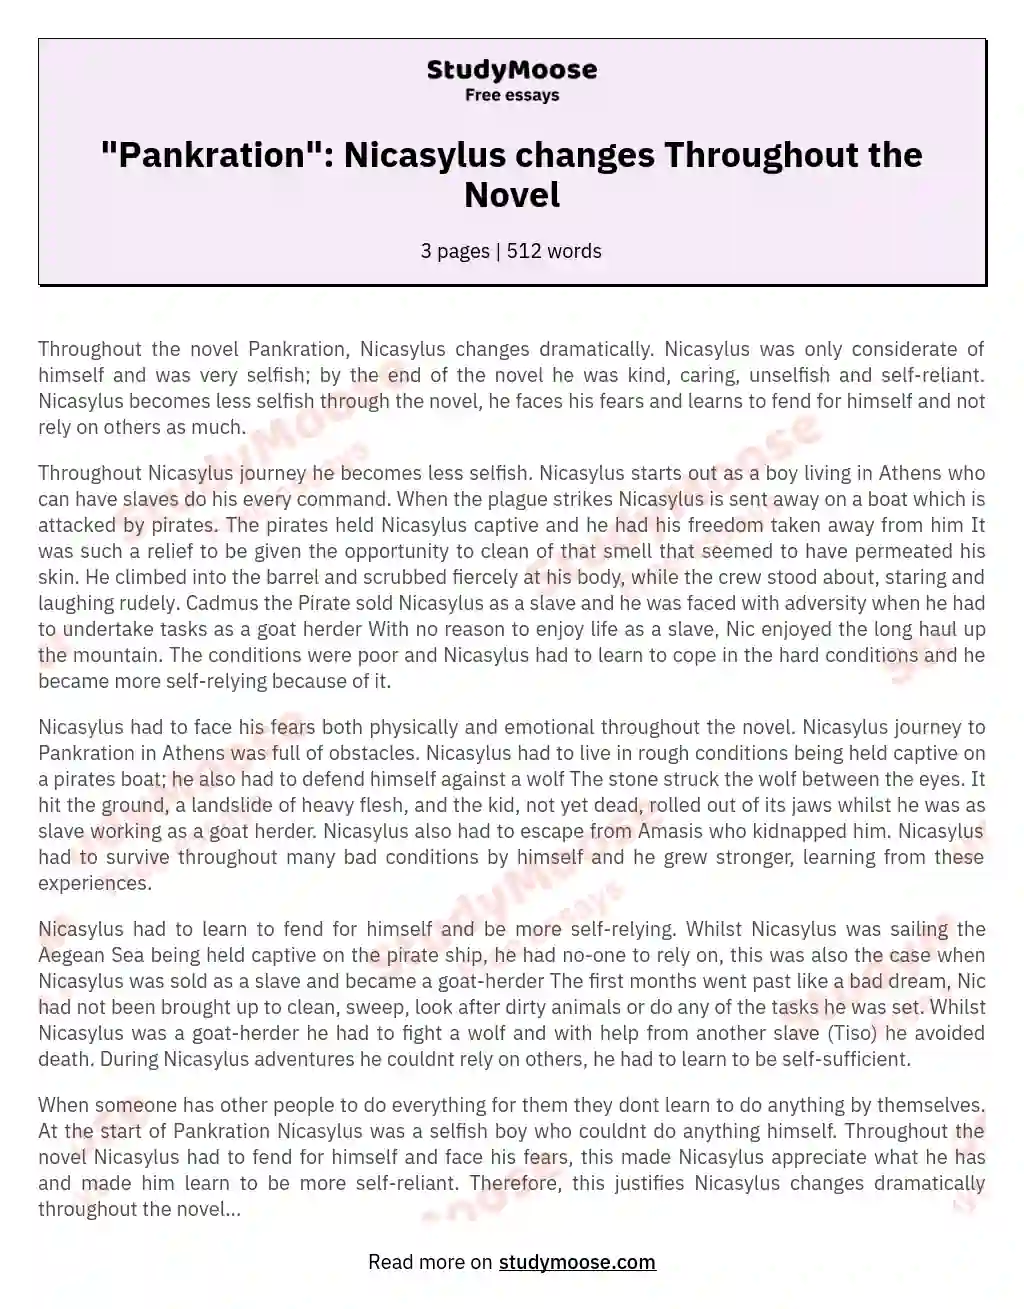 "Pankration": Nicasylus changes Throughout the Novel